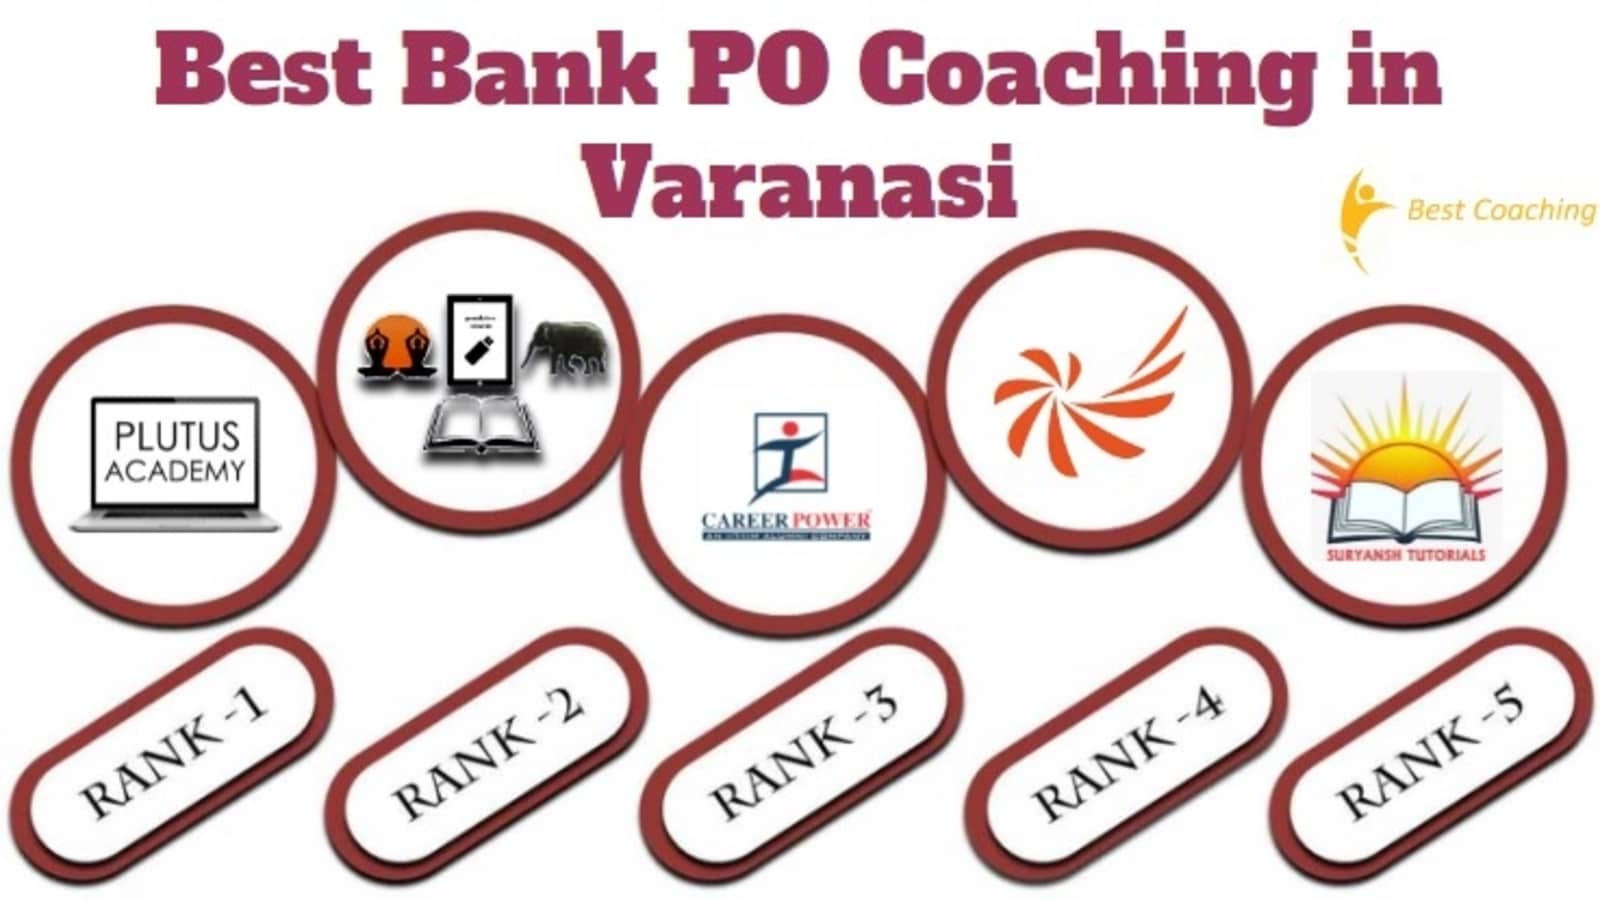 Best Bank PO Coaching in Varanasi